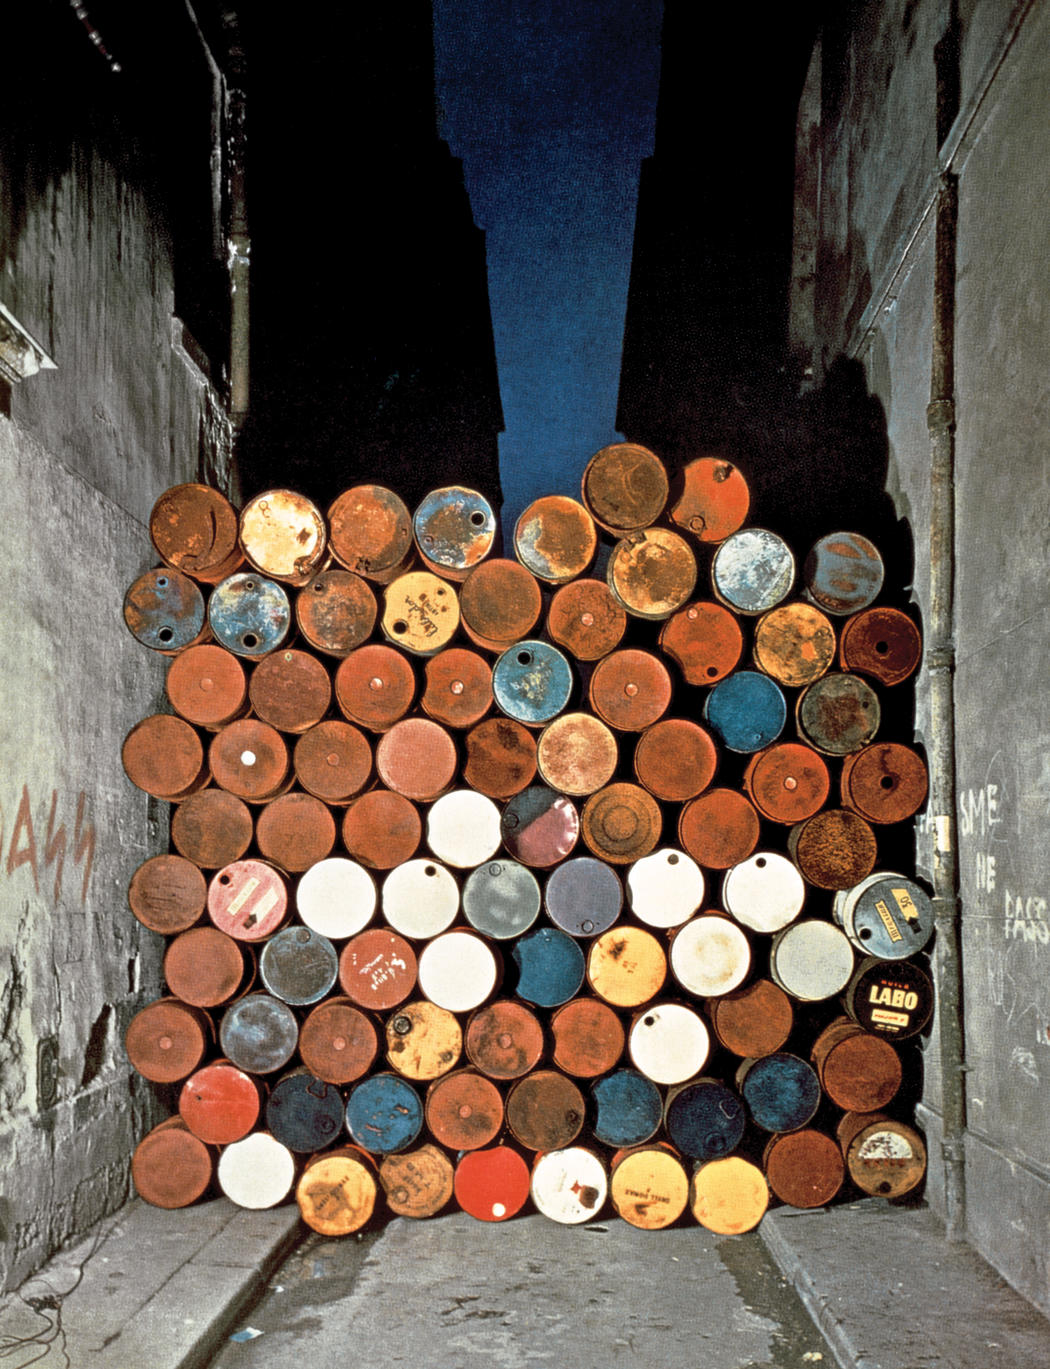 Wall of Oil Barrels - The Iron Curtain, Rue Visconti, Paris, 1961-62 